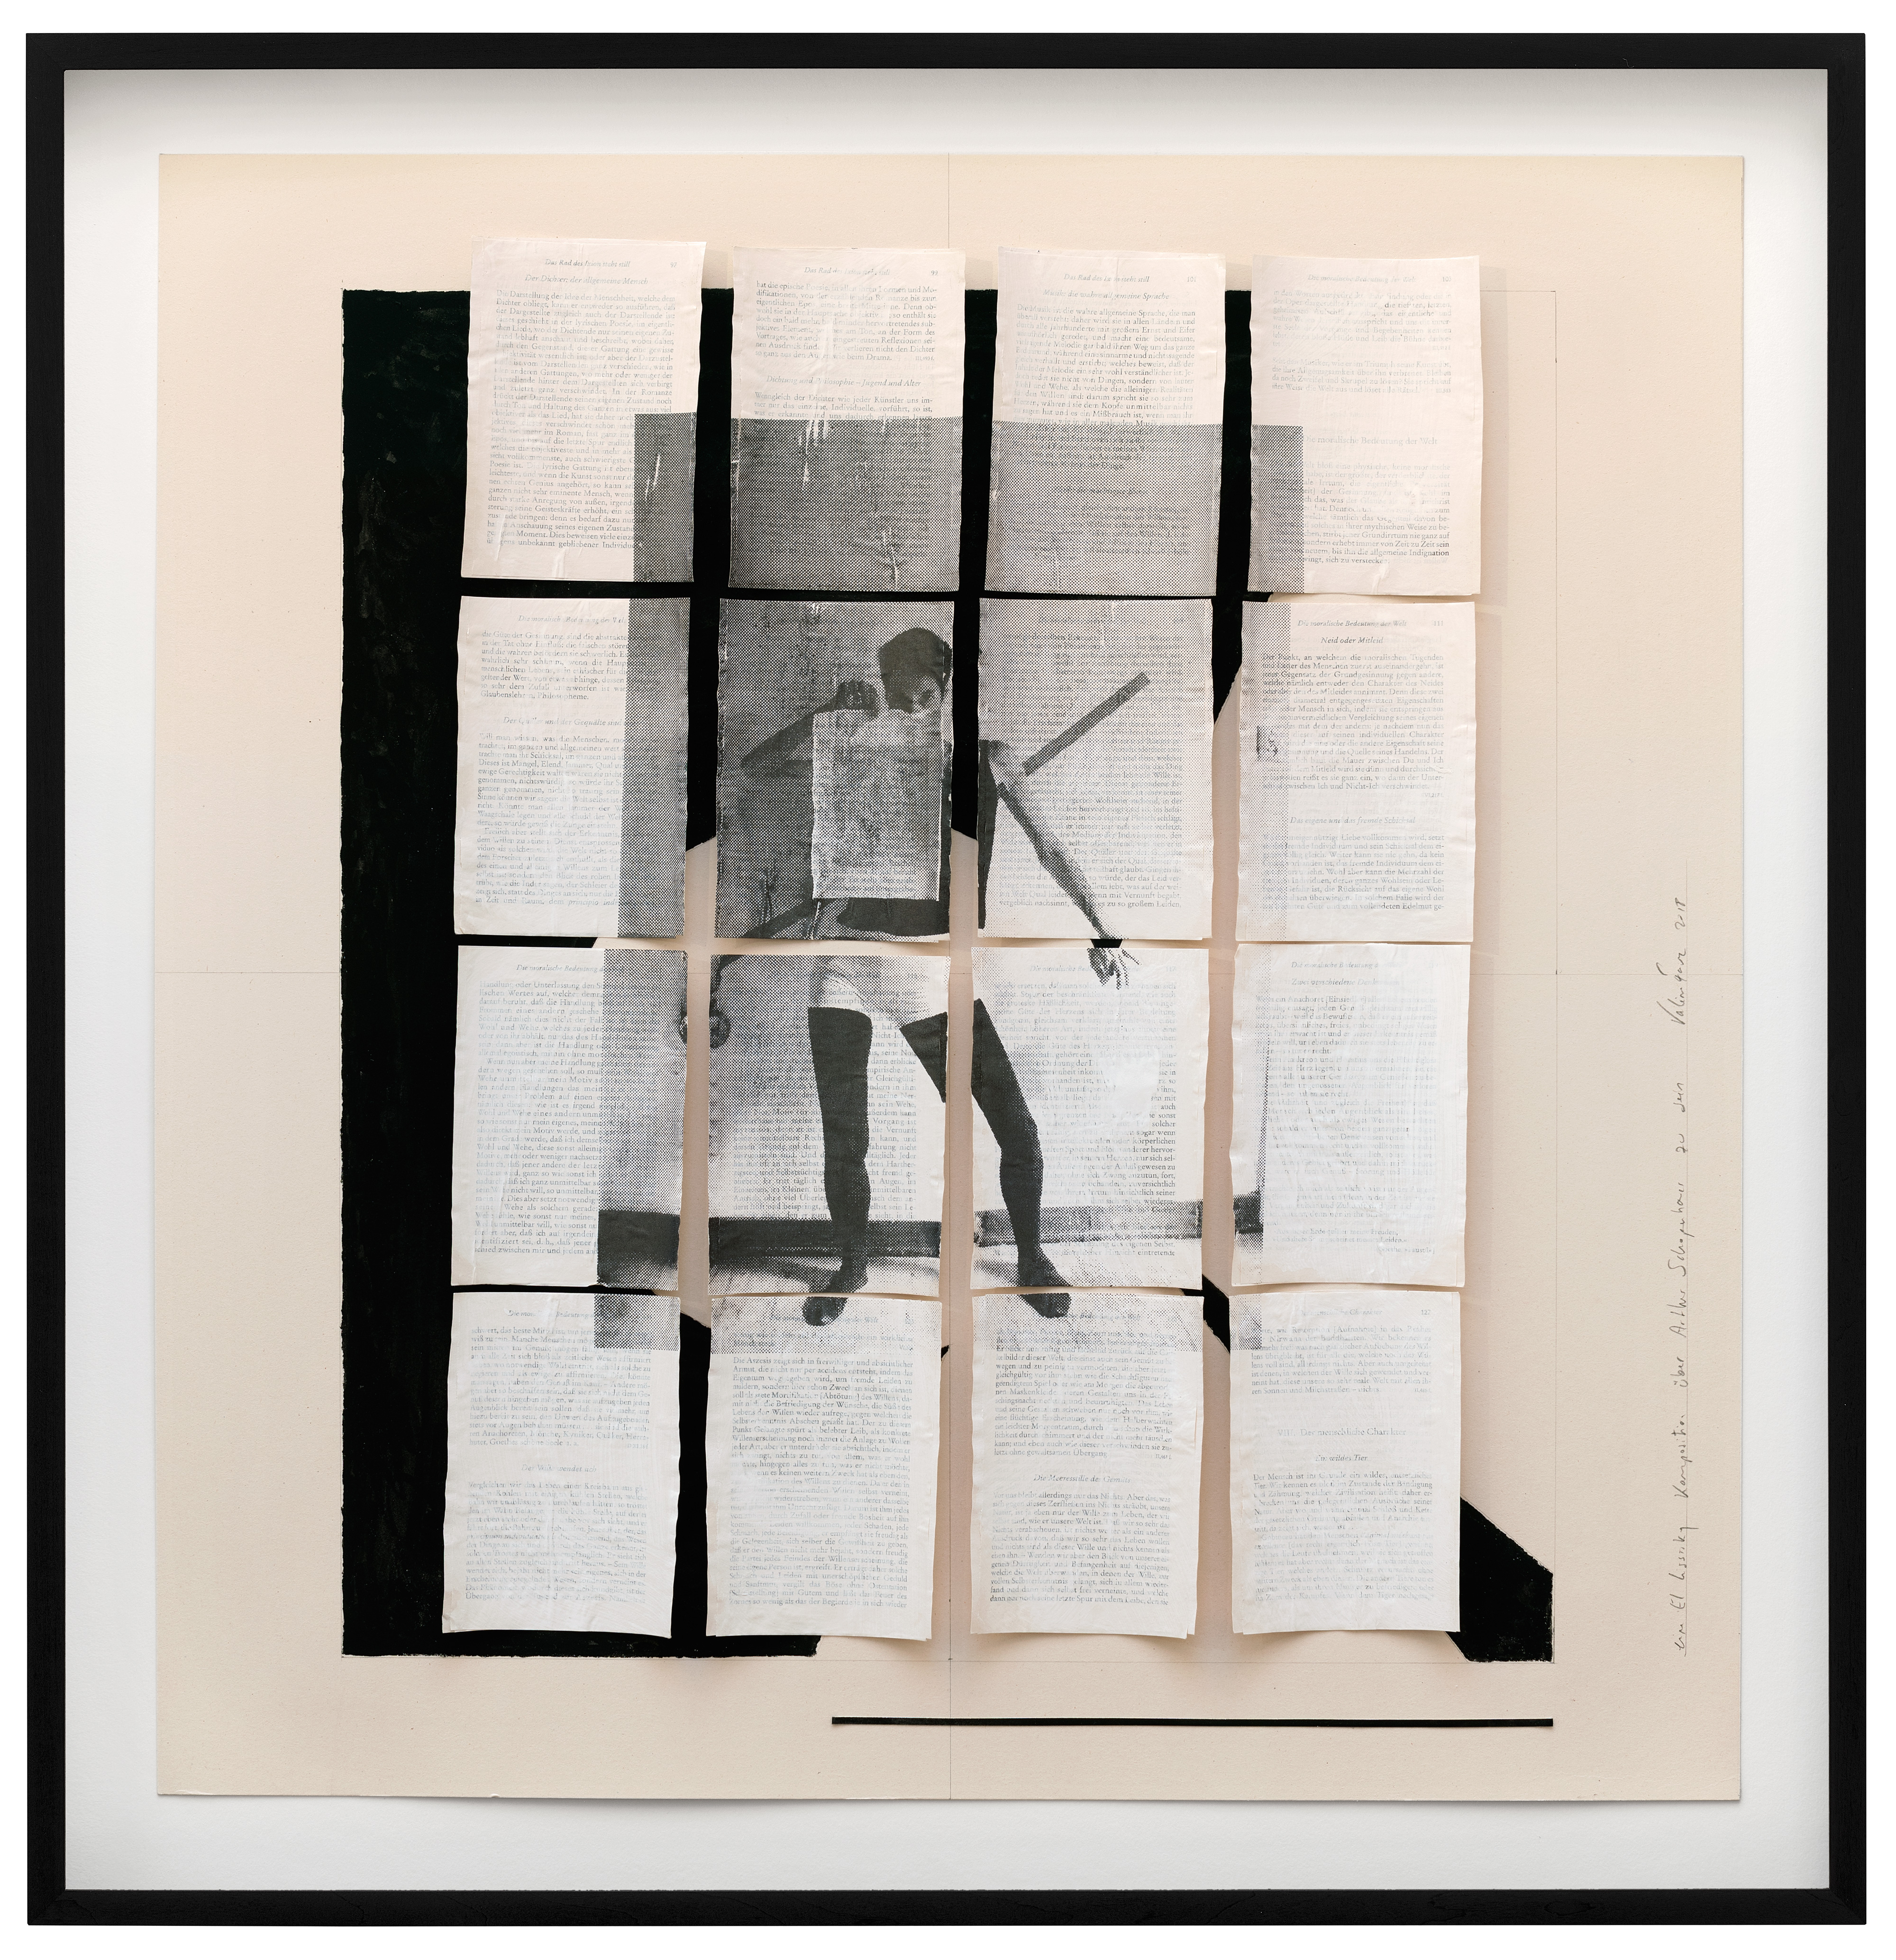 Galerie Barbara Thumm \ Valérie Favre: An El Lissitzky Composition on Arthur Schopenhaur’s About Being (VFa-18-034) \ An El Lissitzky Composition on Arthur Schopenhaur&#8217;s About Being (2018)